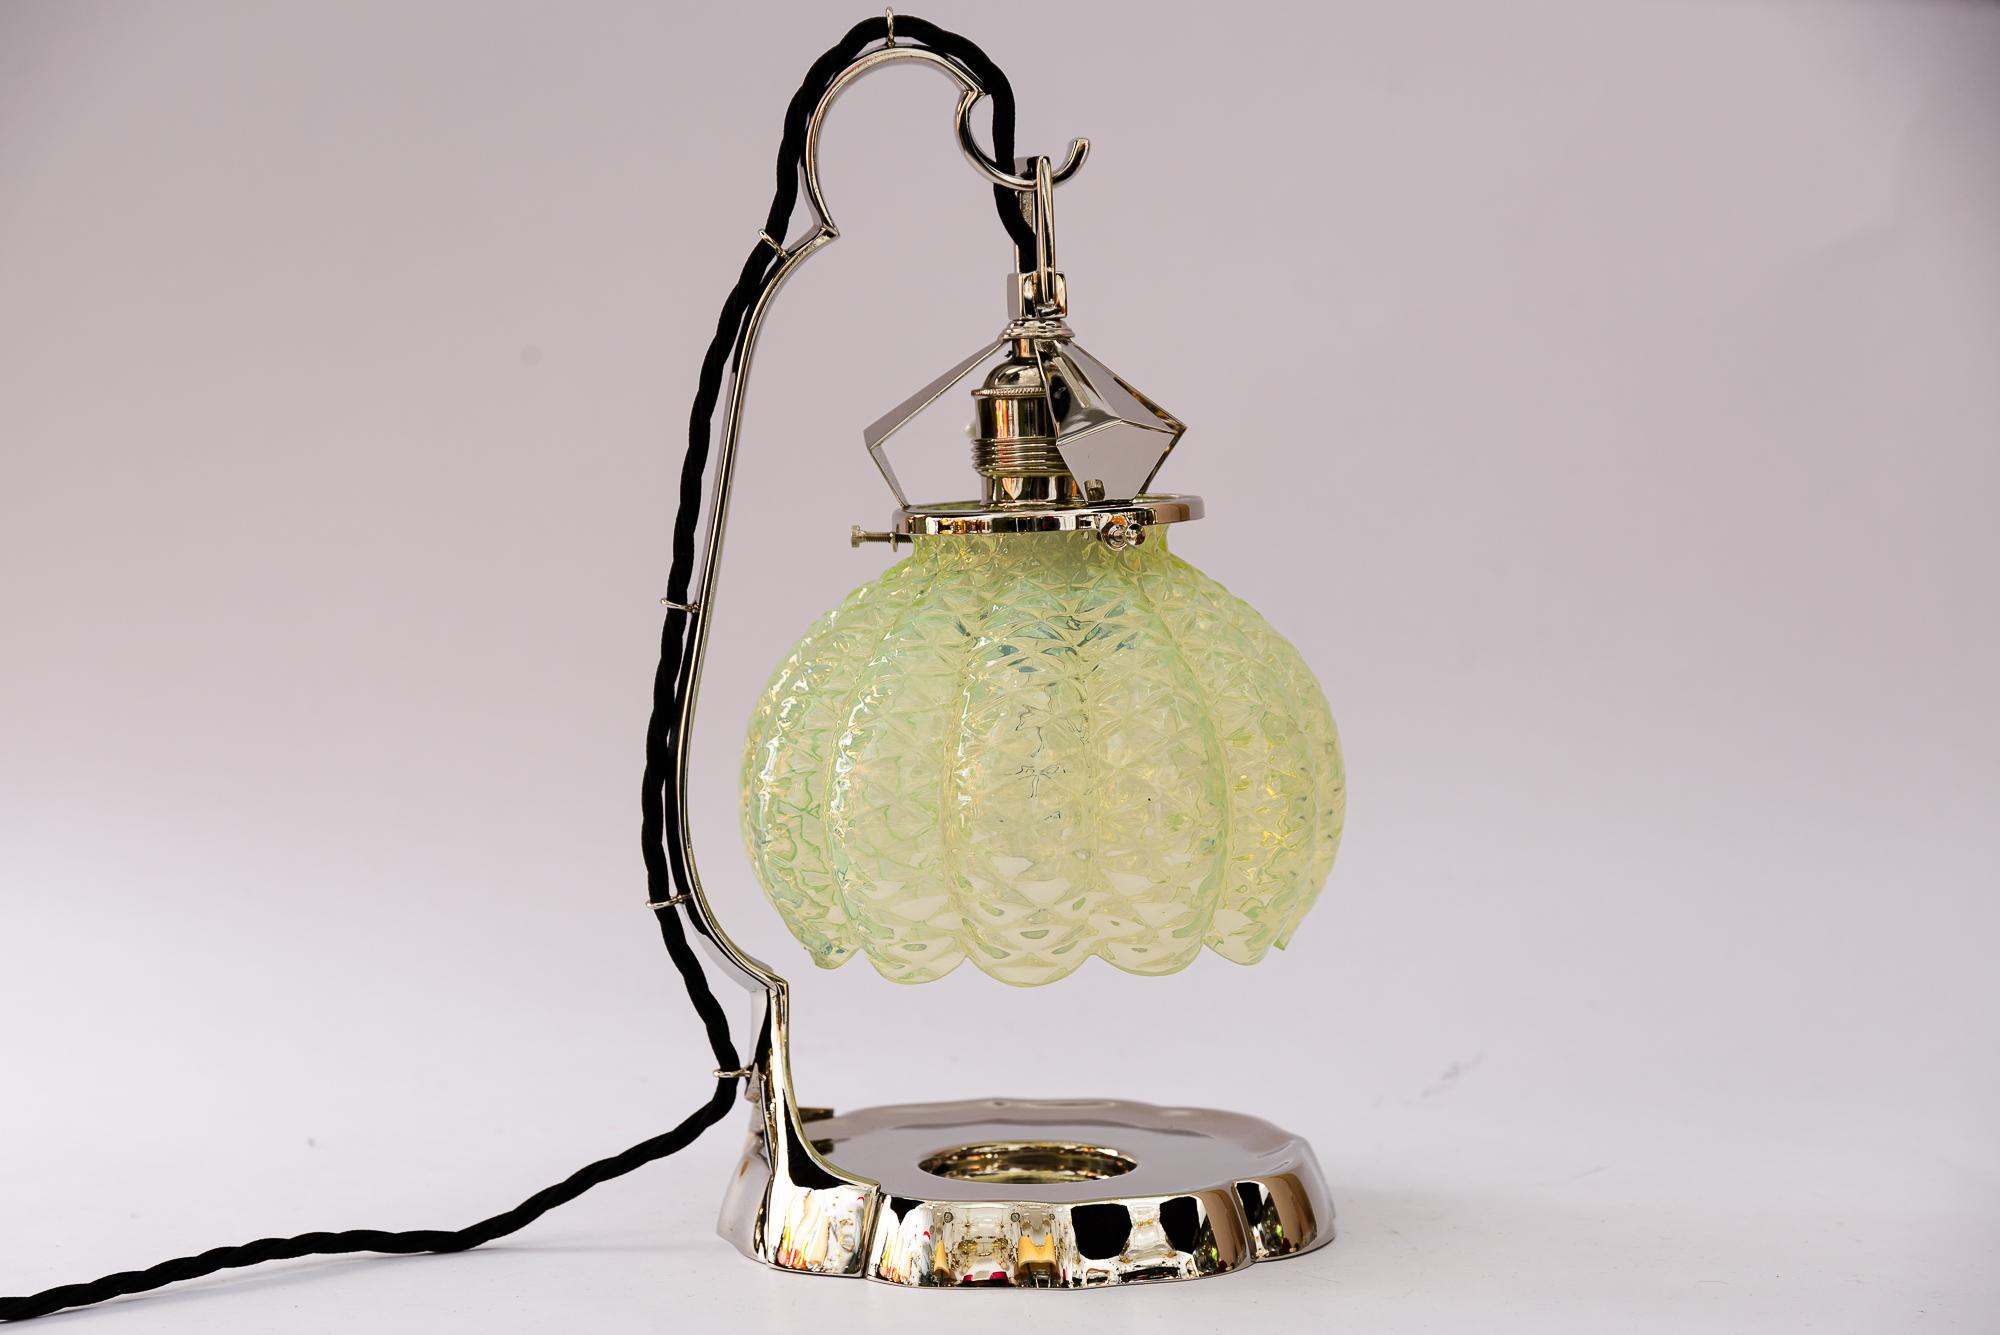 Art Deco nickel table lamp with original opaline glass shade vienna around 1920s
Nickel - plated
